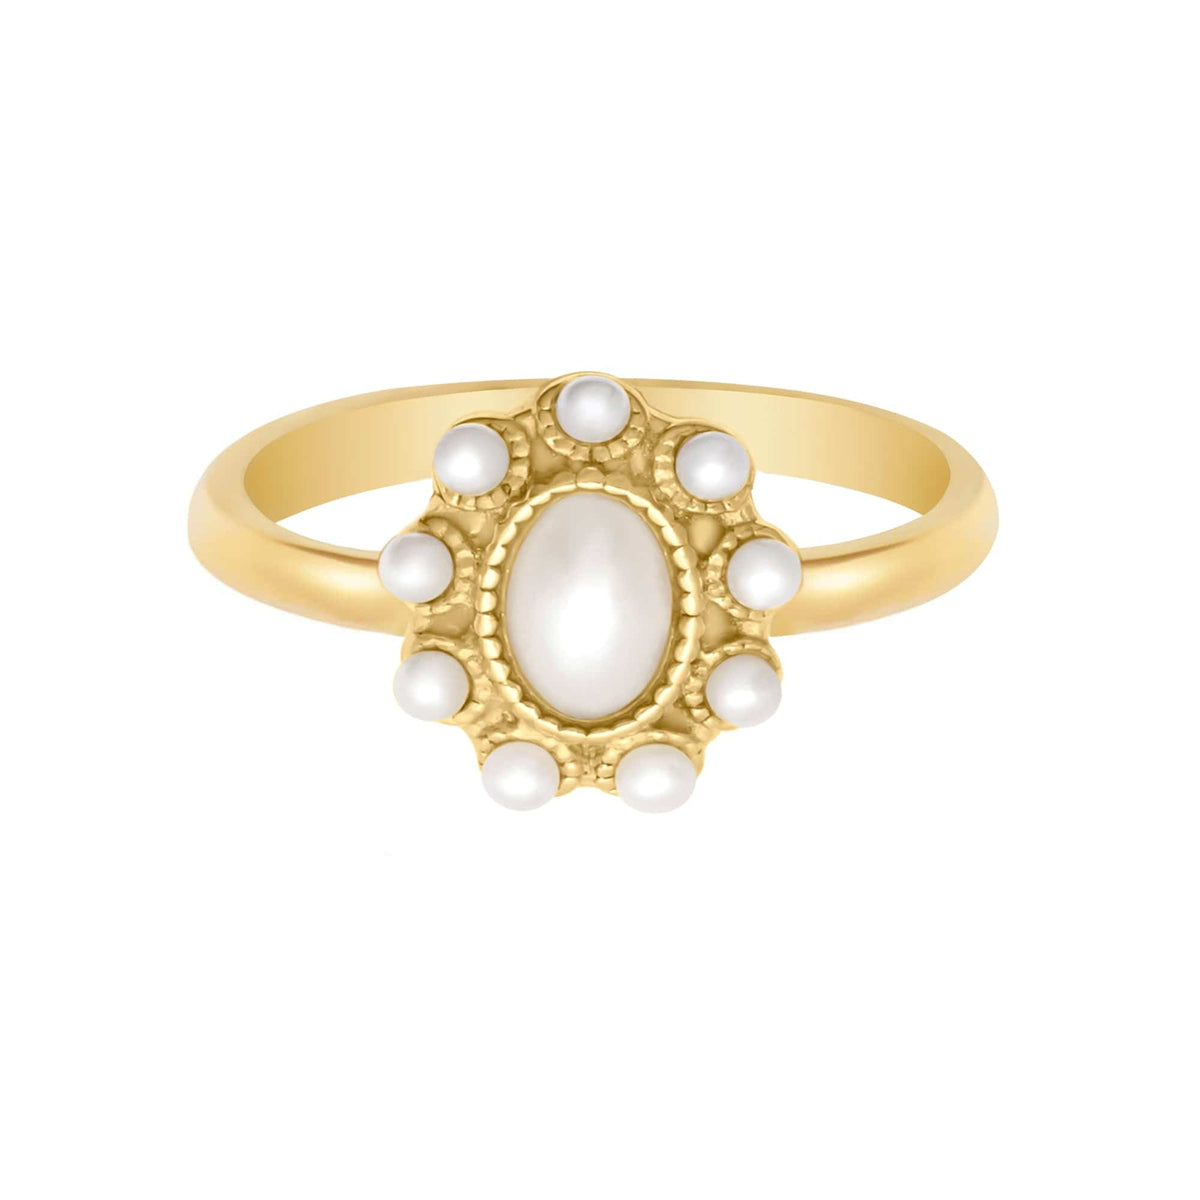 BohoMoon Stainless Steel Enchanted Pearl Ring